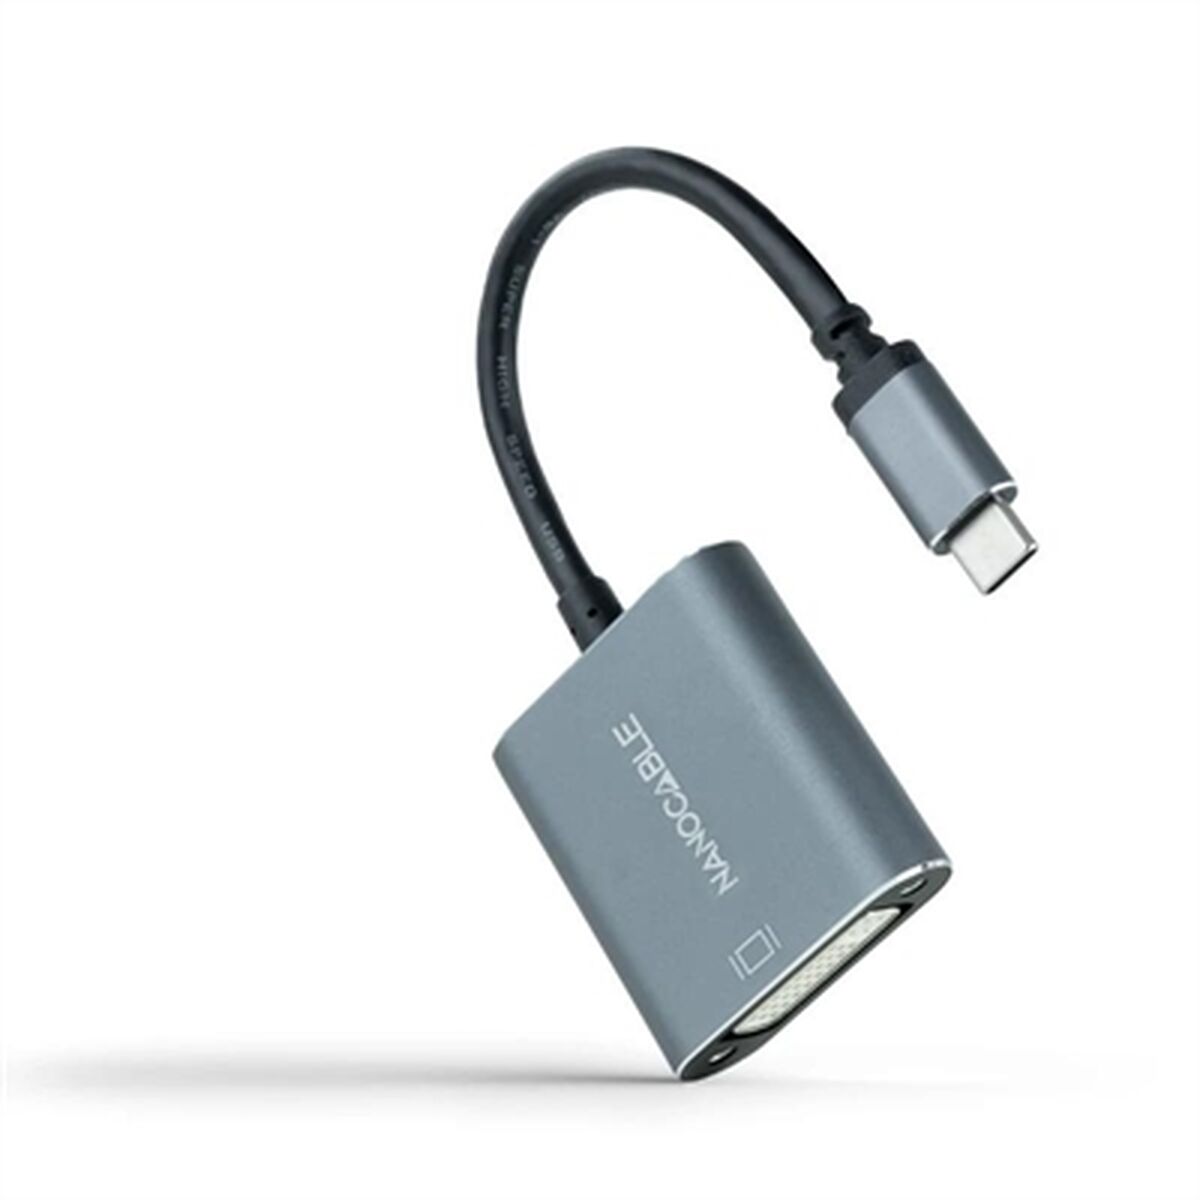 Nanocable Adaptador USB-C a HDMI Macho/Hembra 15cm